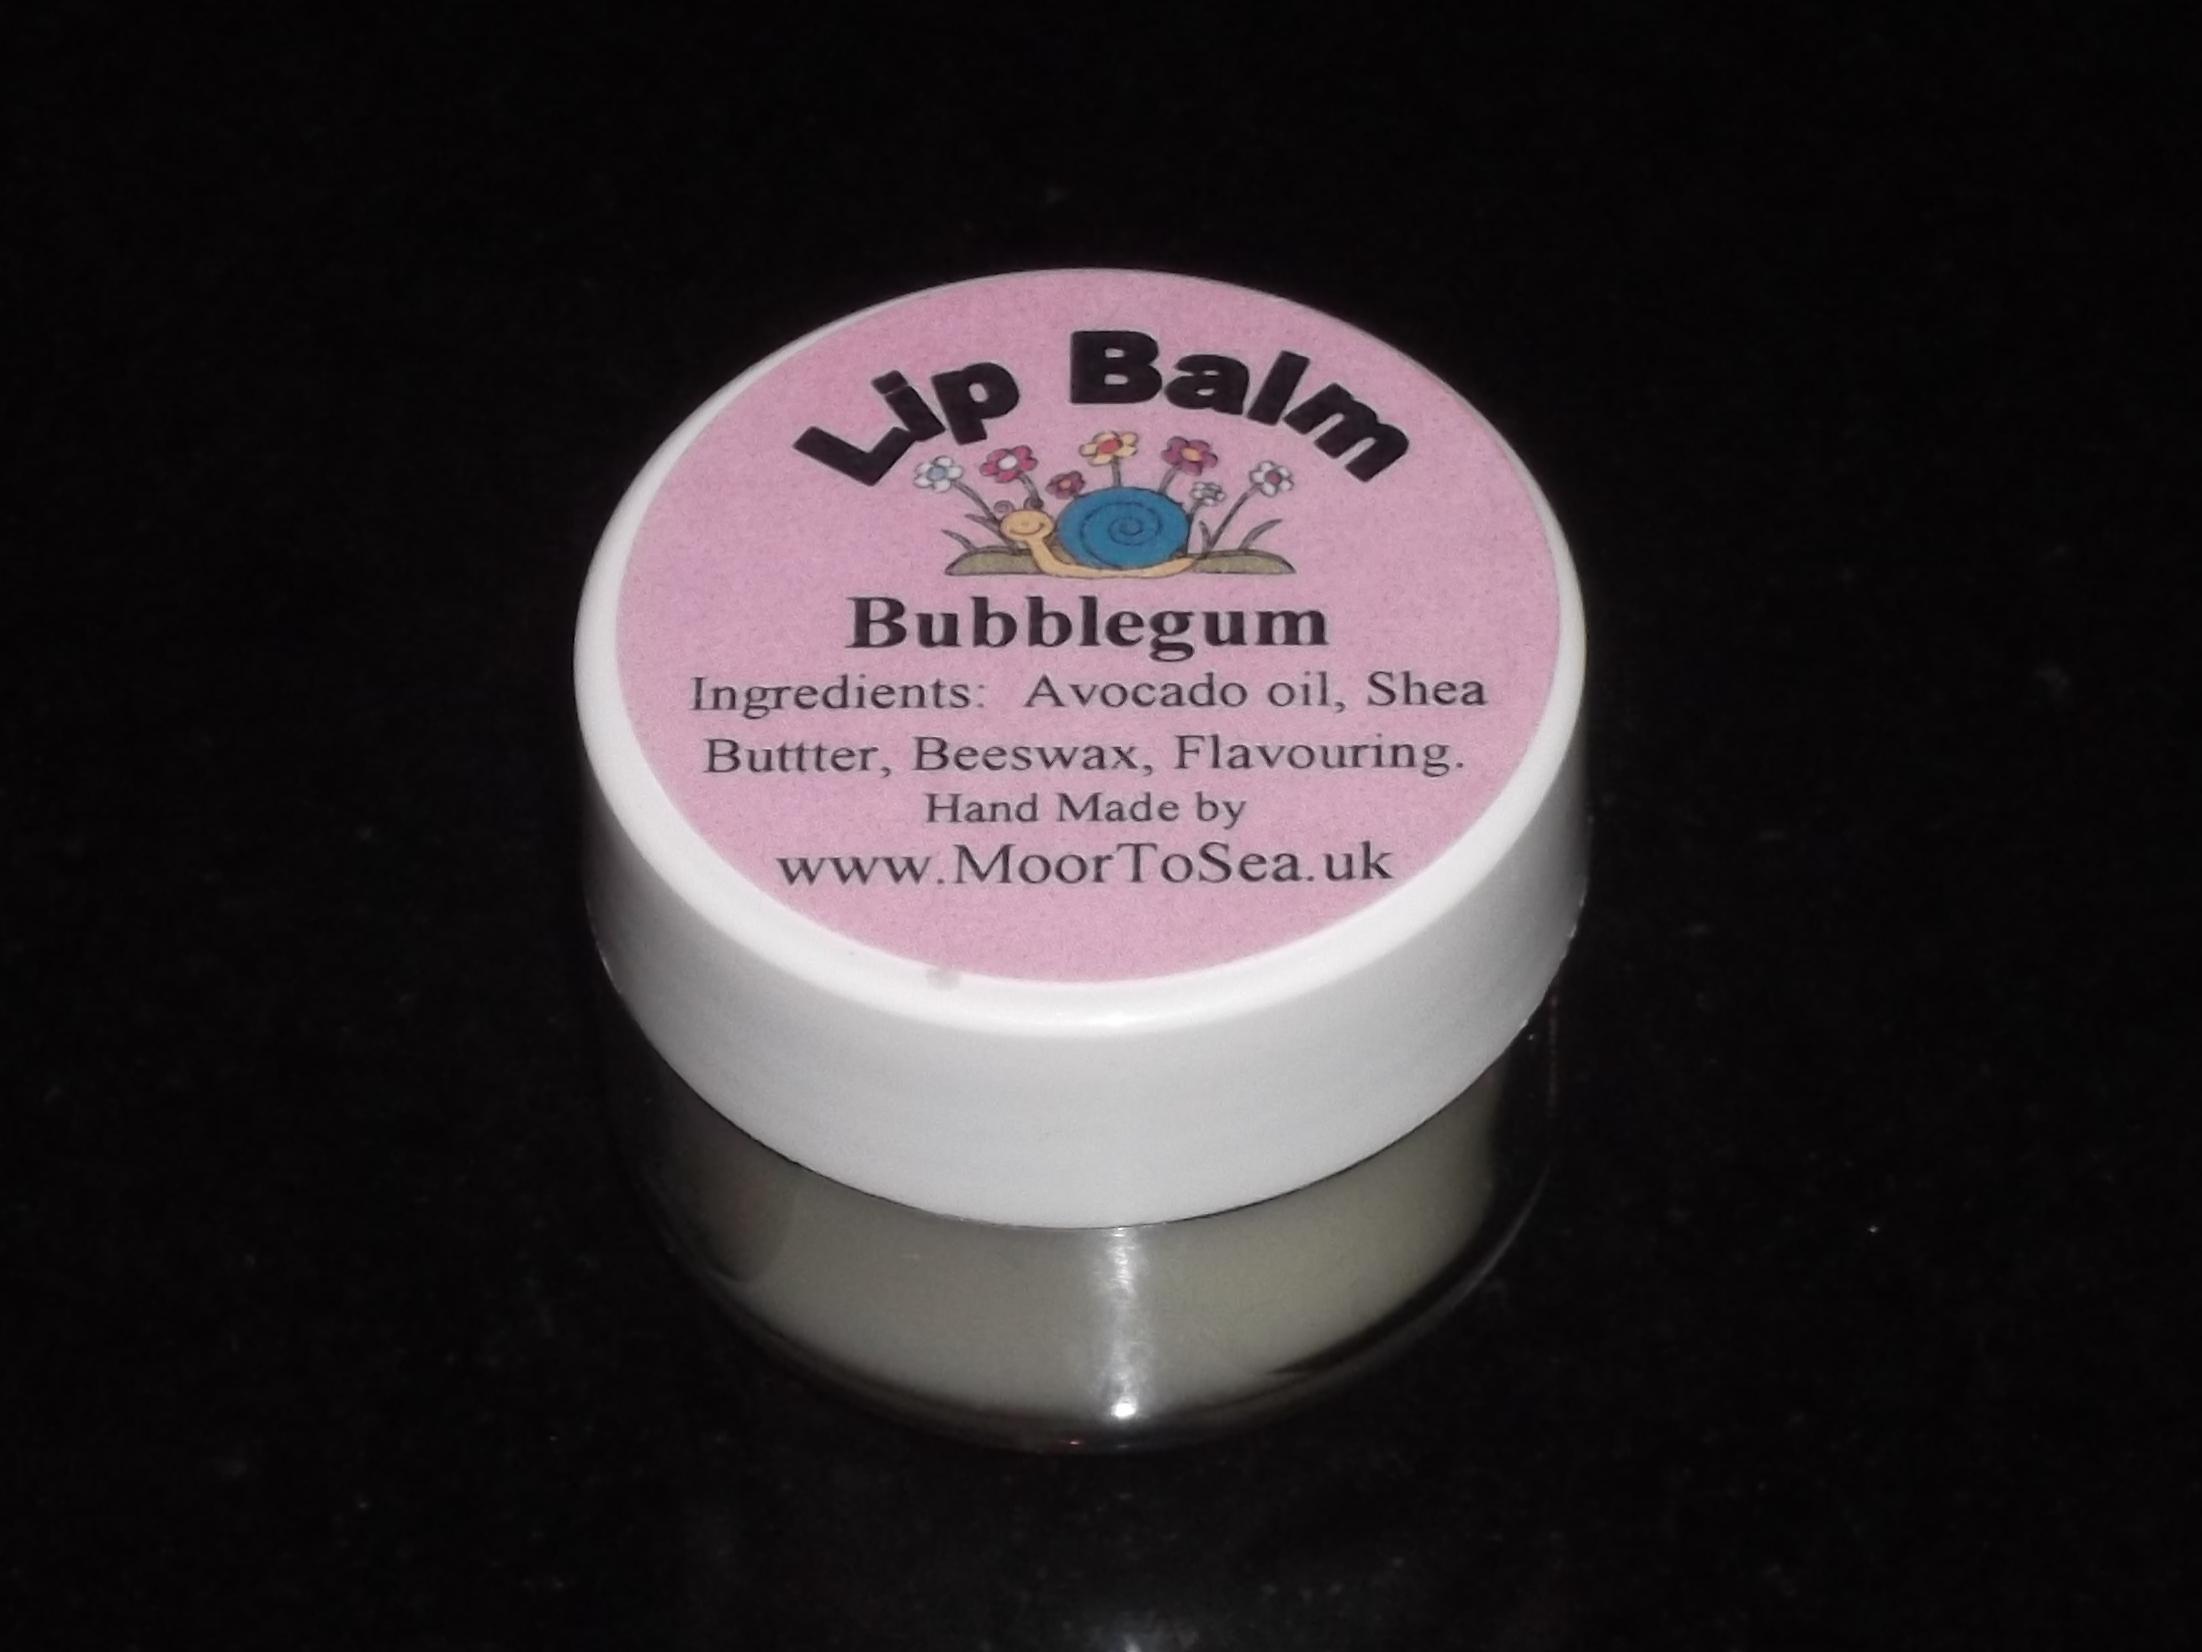 Lip balm - Bubble gum